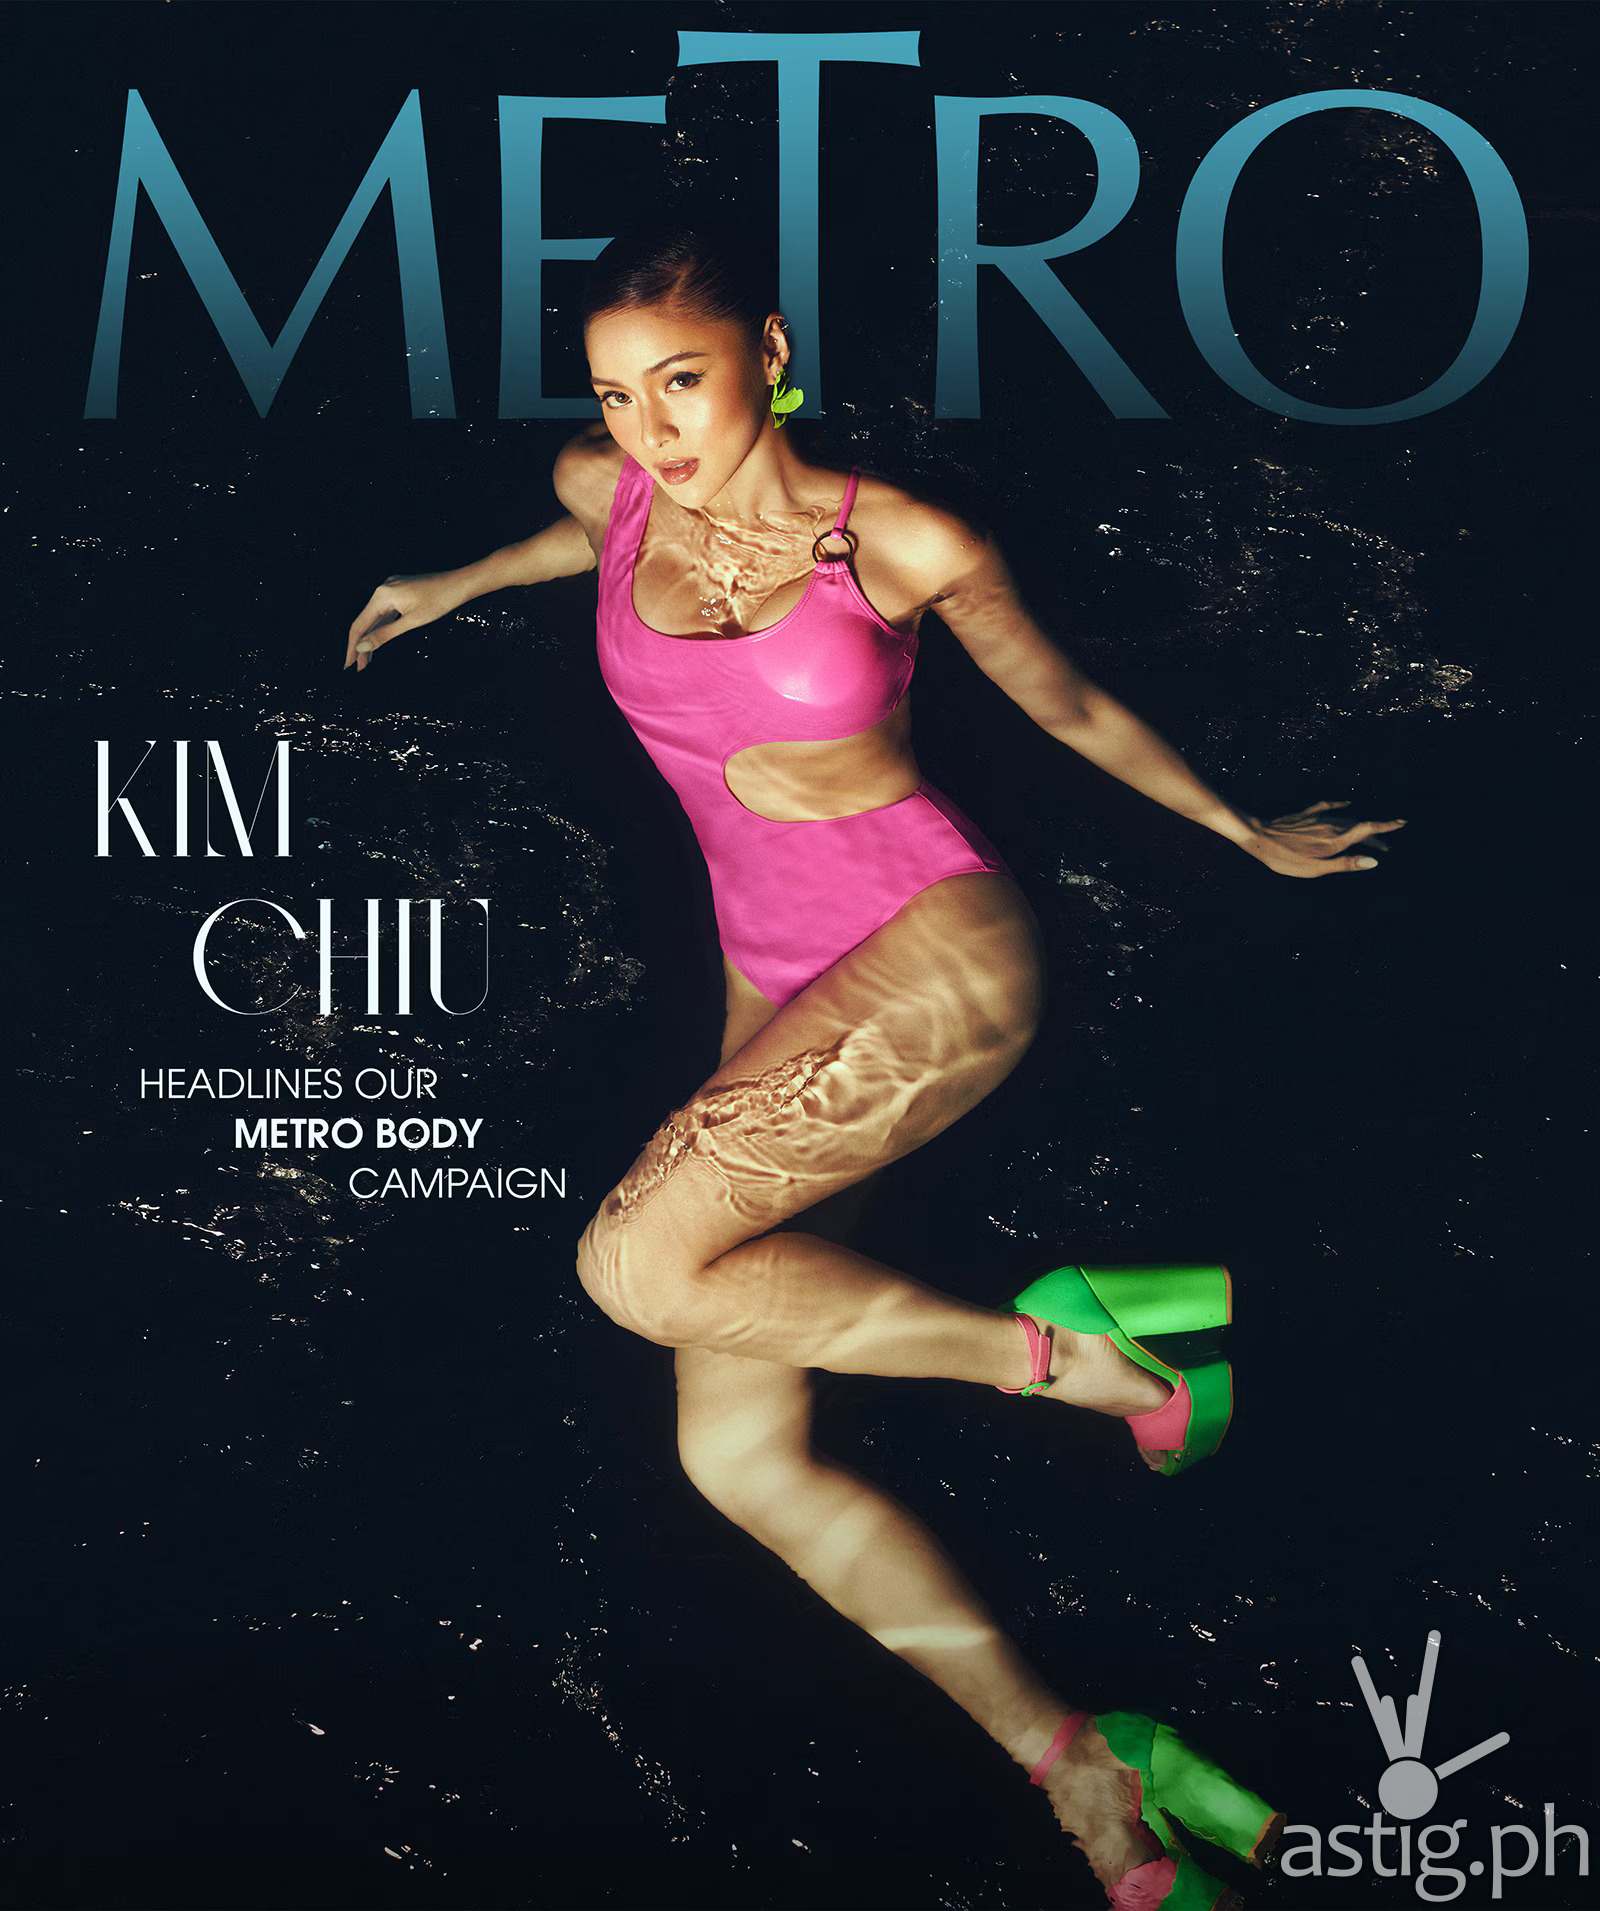 Kim Heats Up Summer as Metro's Star Cover